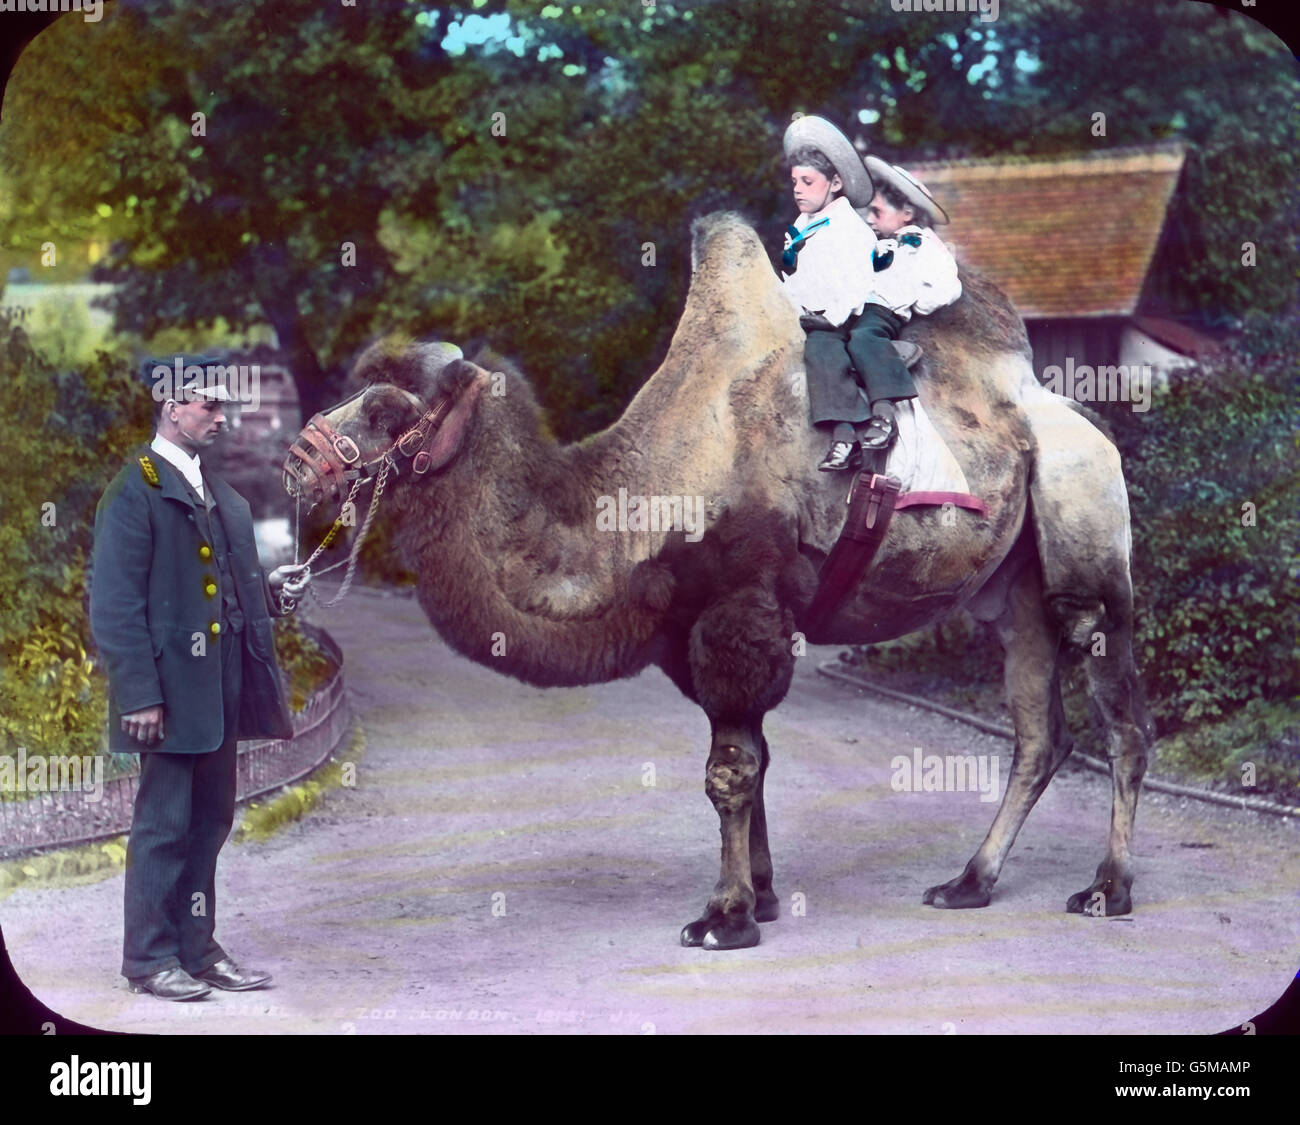 Kamel. Camel. Stock Photo